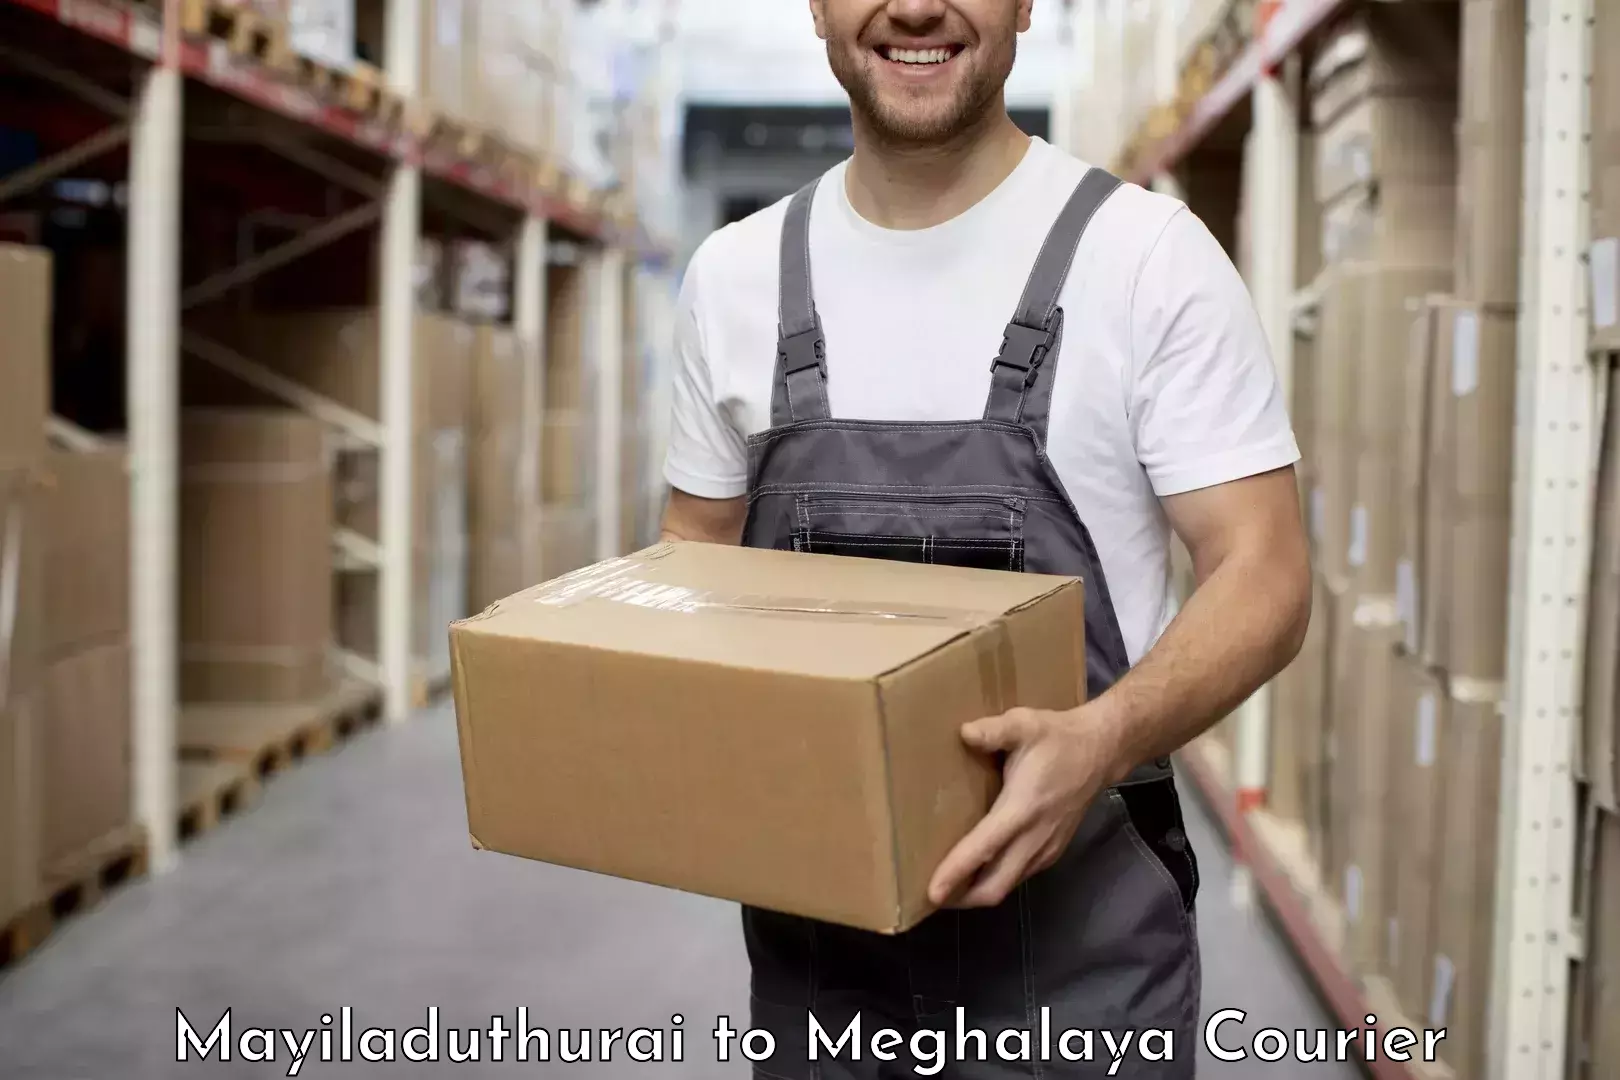 High-capacity parcel service Mayiladuthurai to Meghalaya